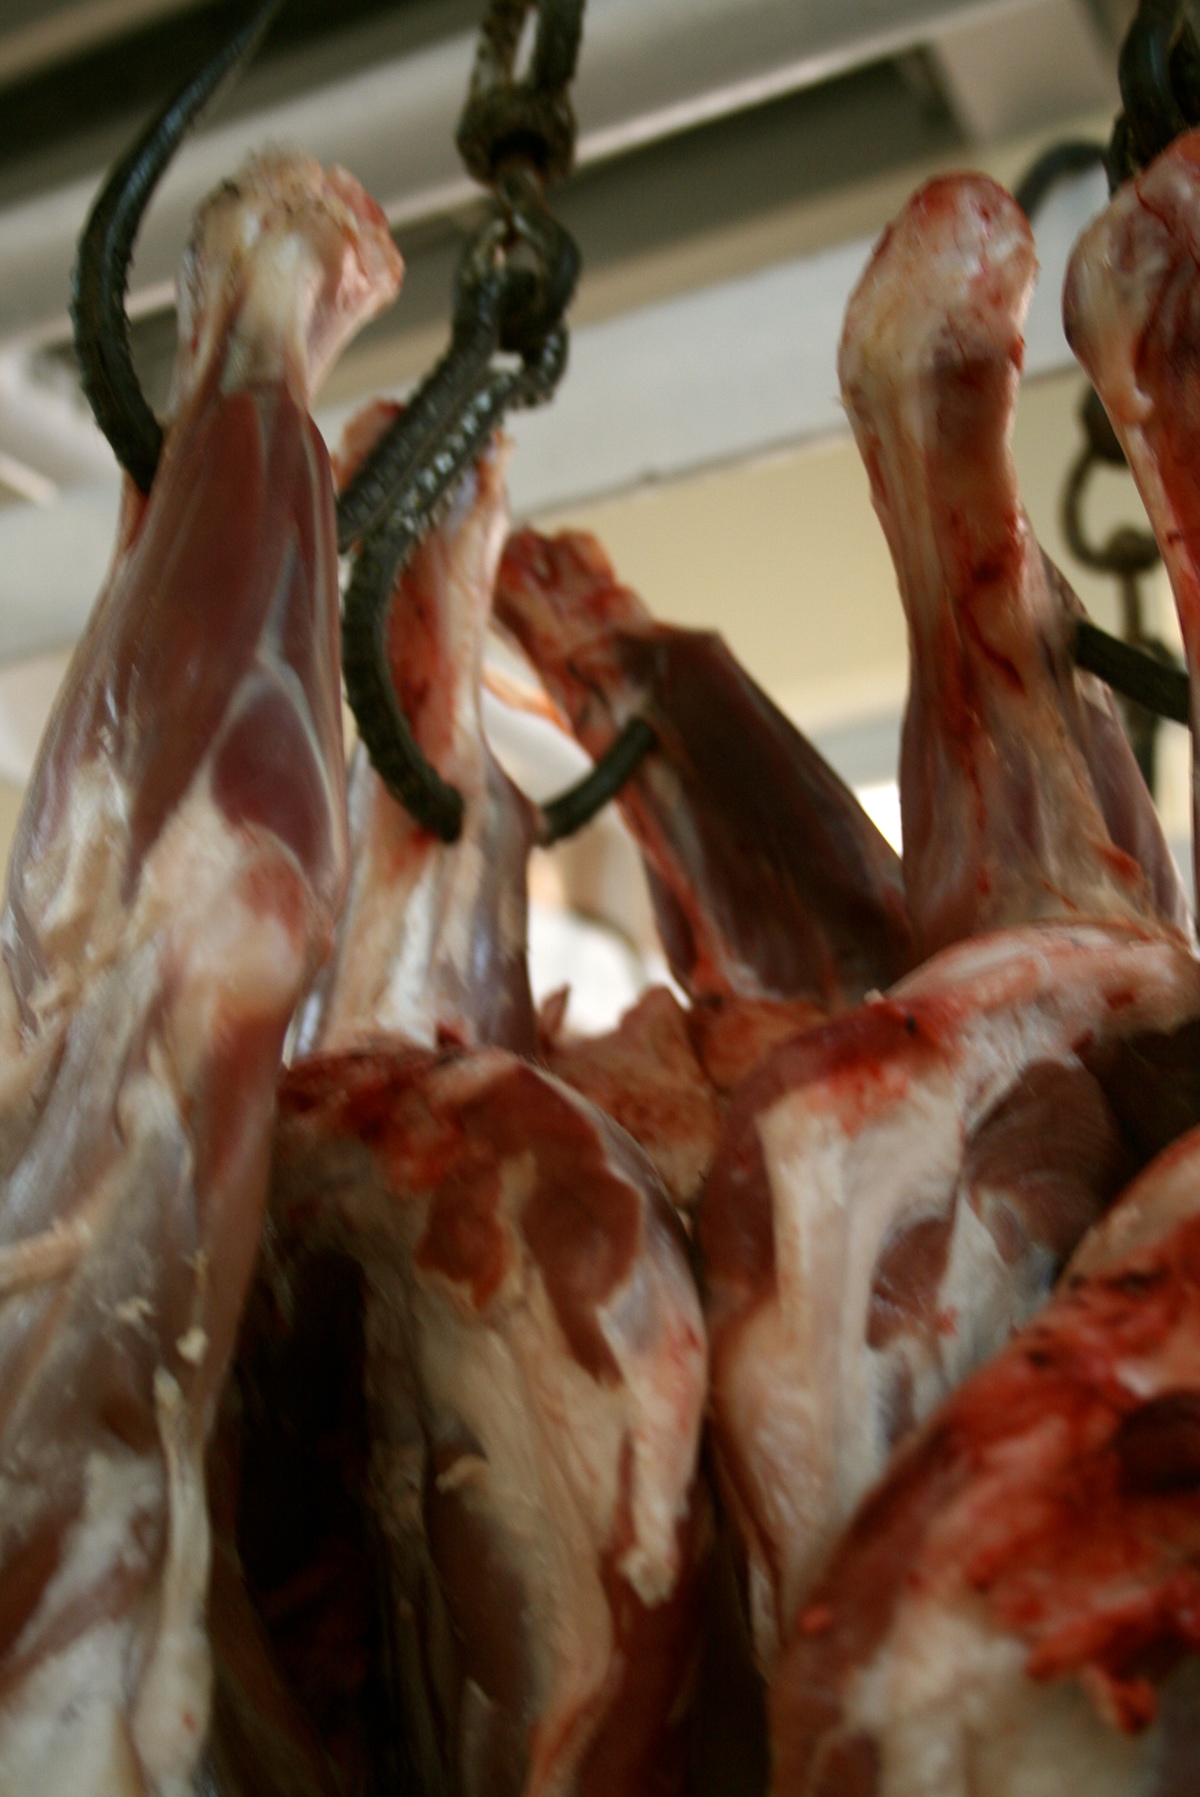 animal slaughter slaughter meat lamb Bahrain Meat Market a level growth evolution red dead animal animals blood bones